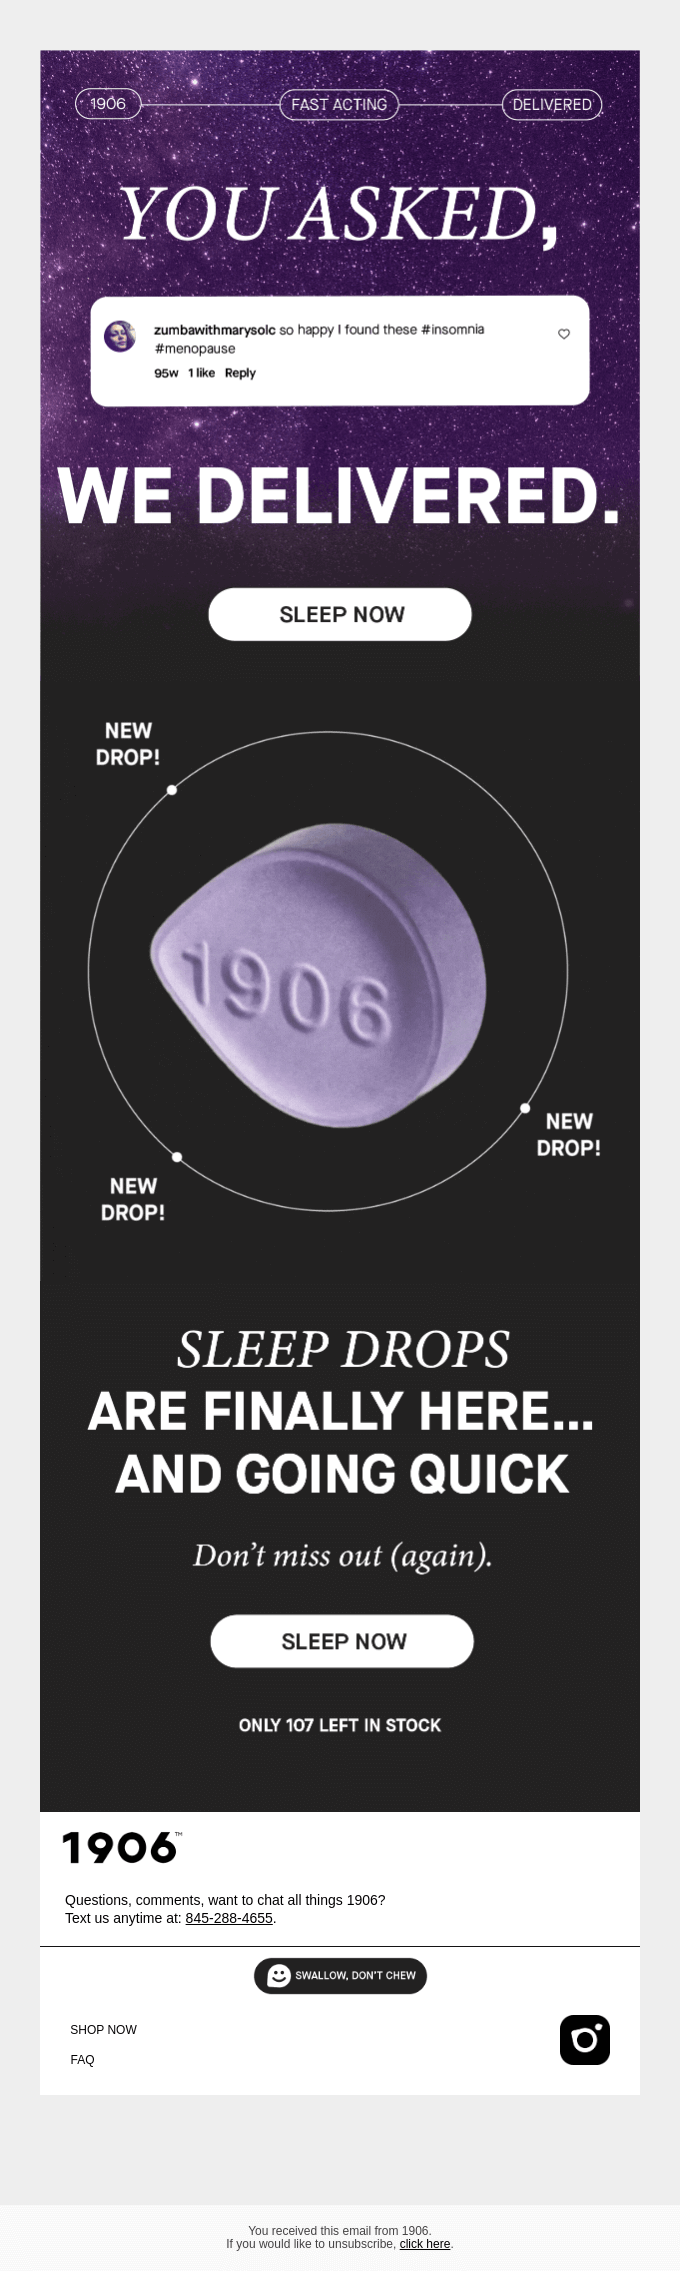 Only 107 Sleep Drops left